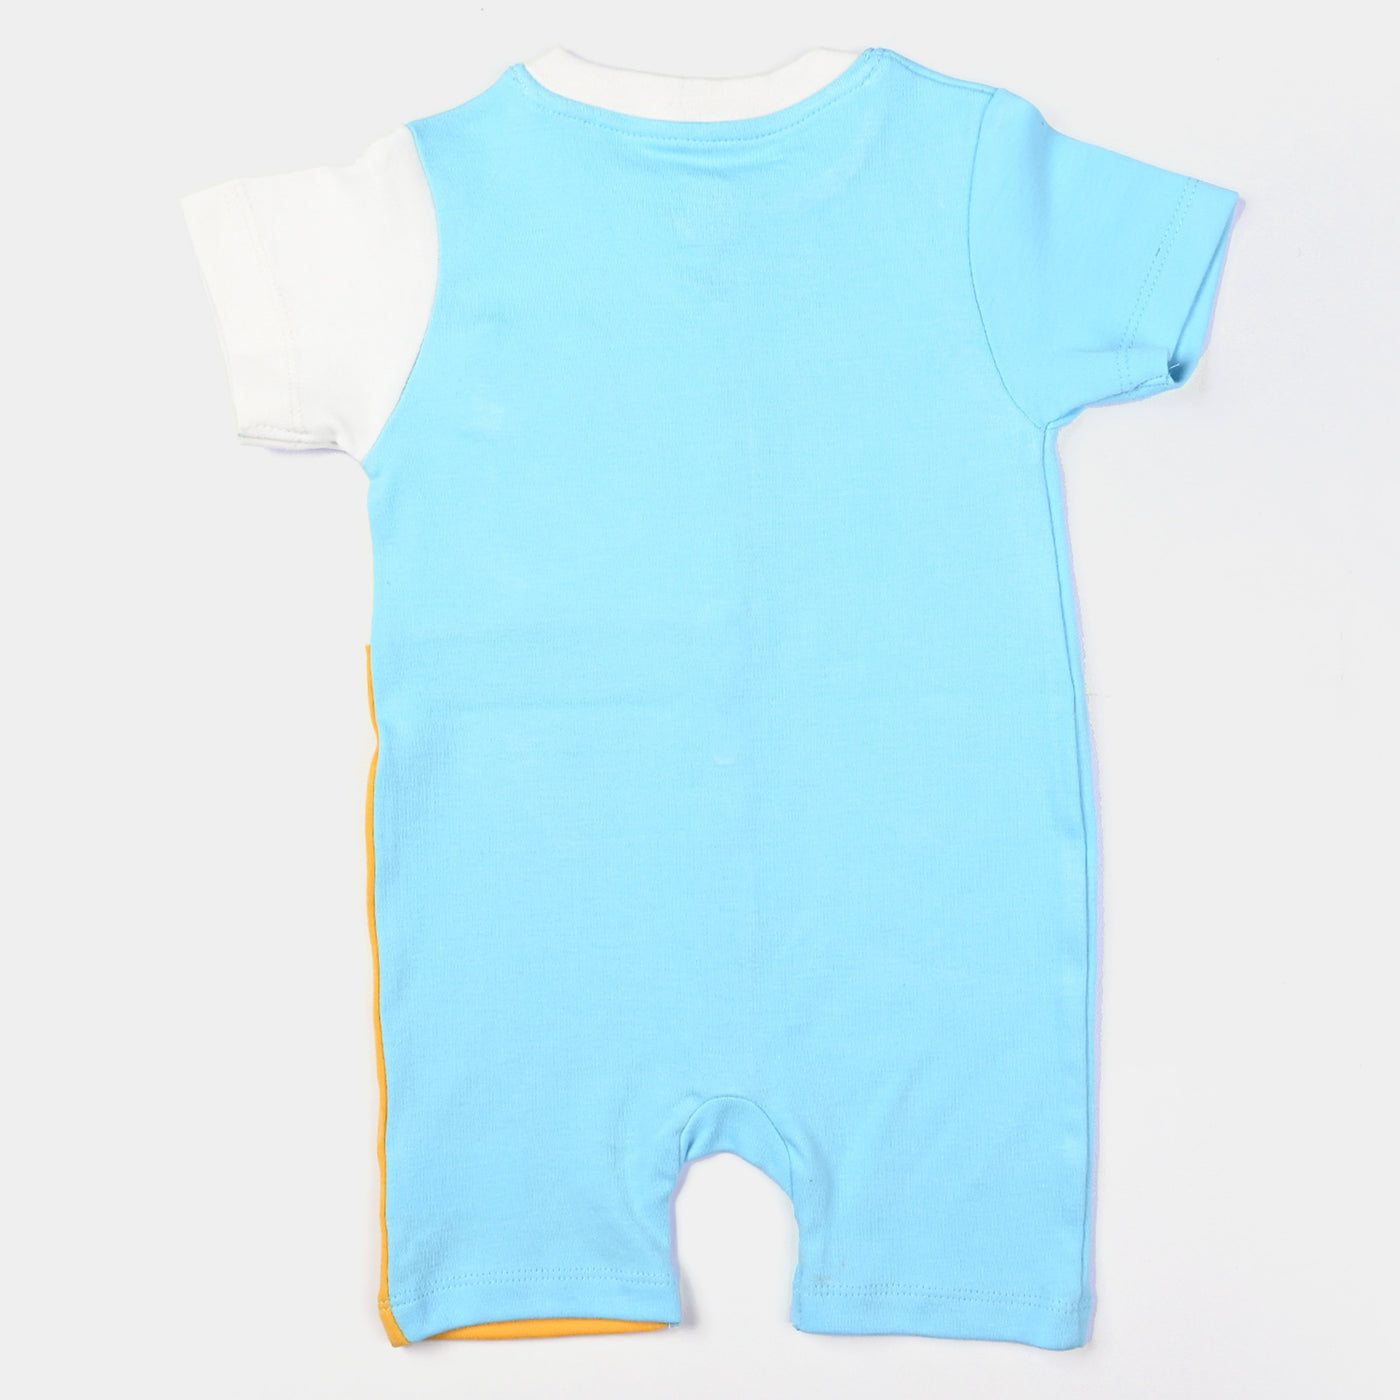 Infant Boys Cotton Interlock Knitted Romper Cat Face Pocket-Blue